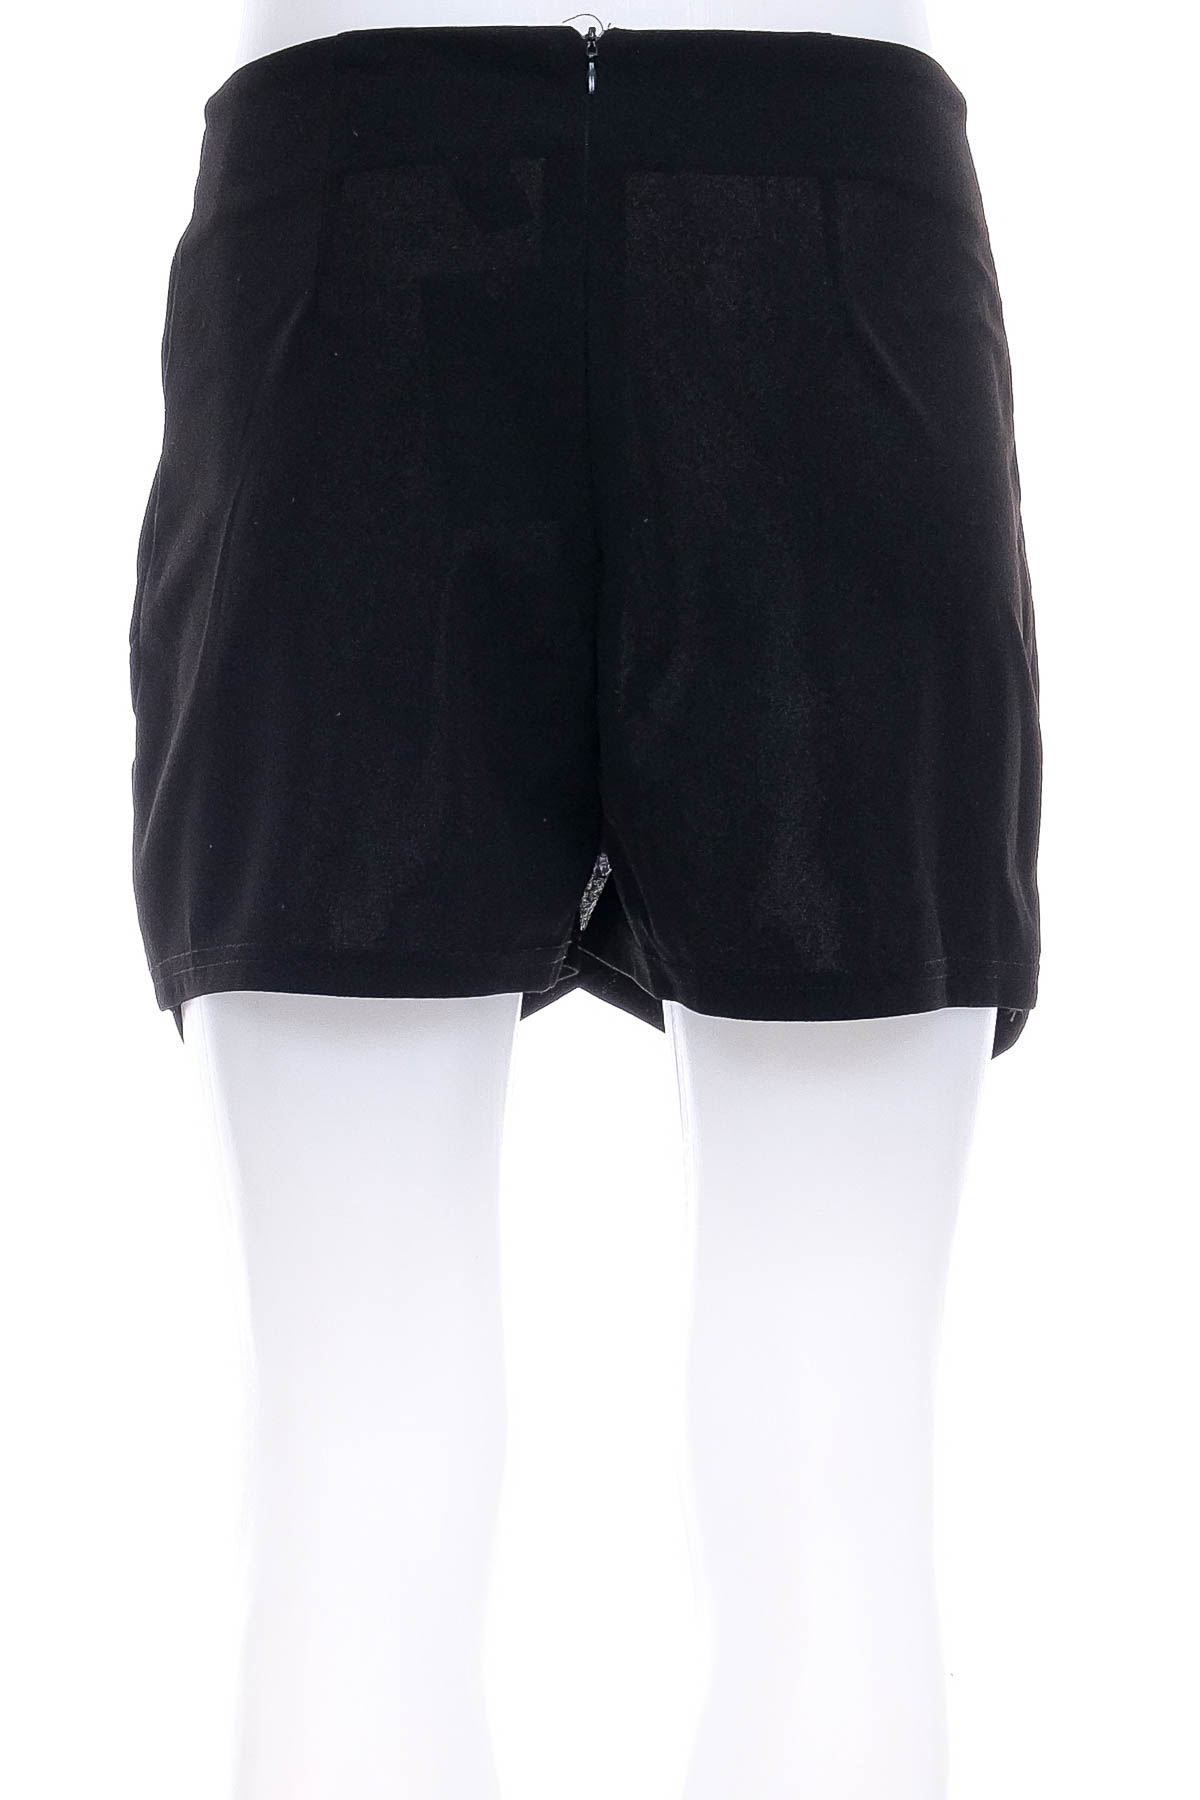 Skirt - pants - SHEIN - 1